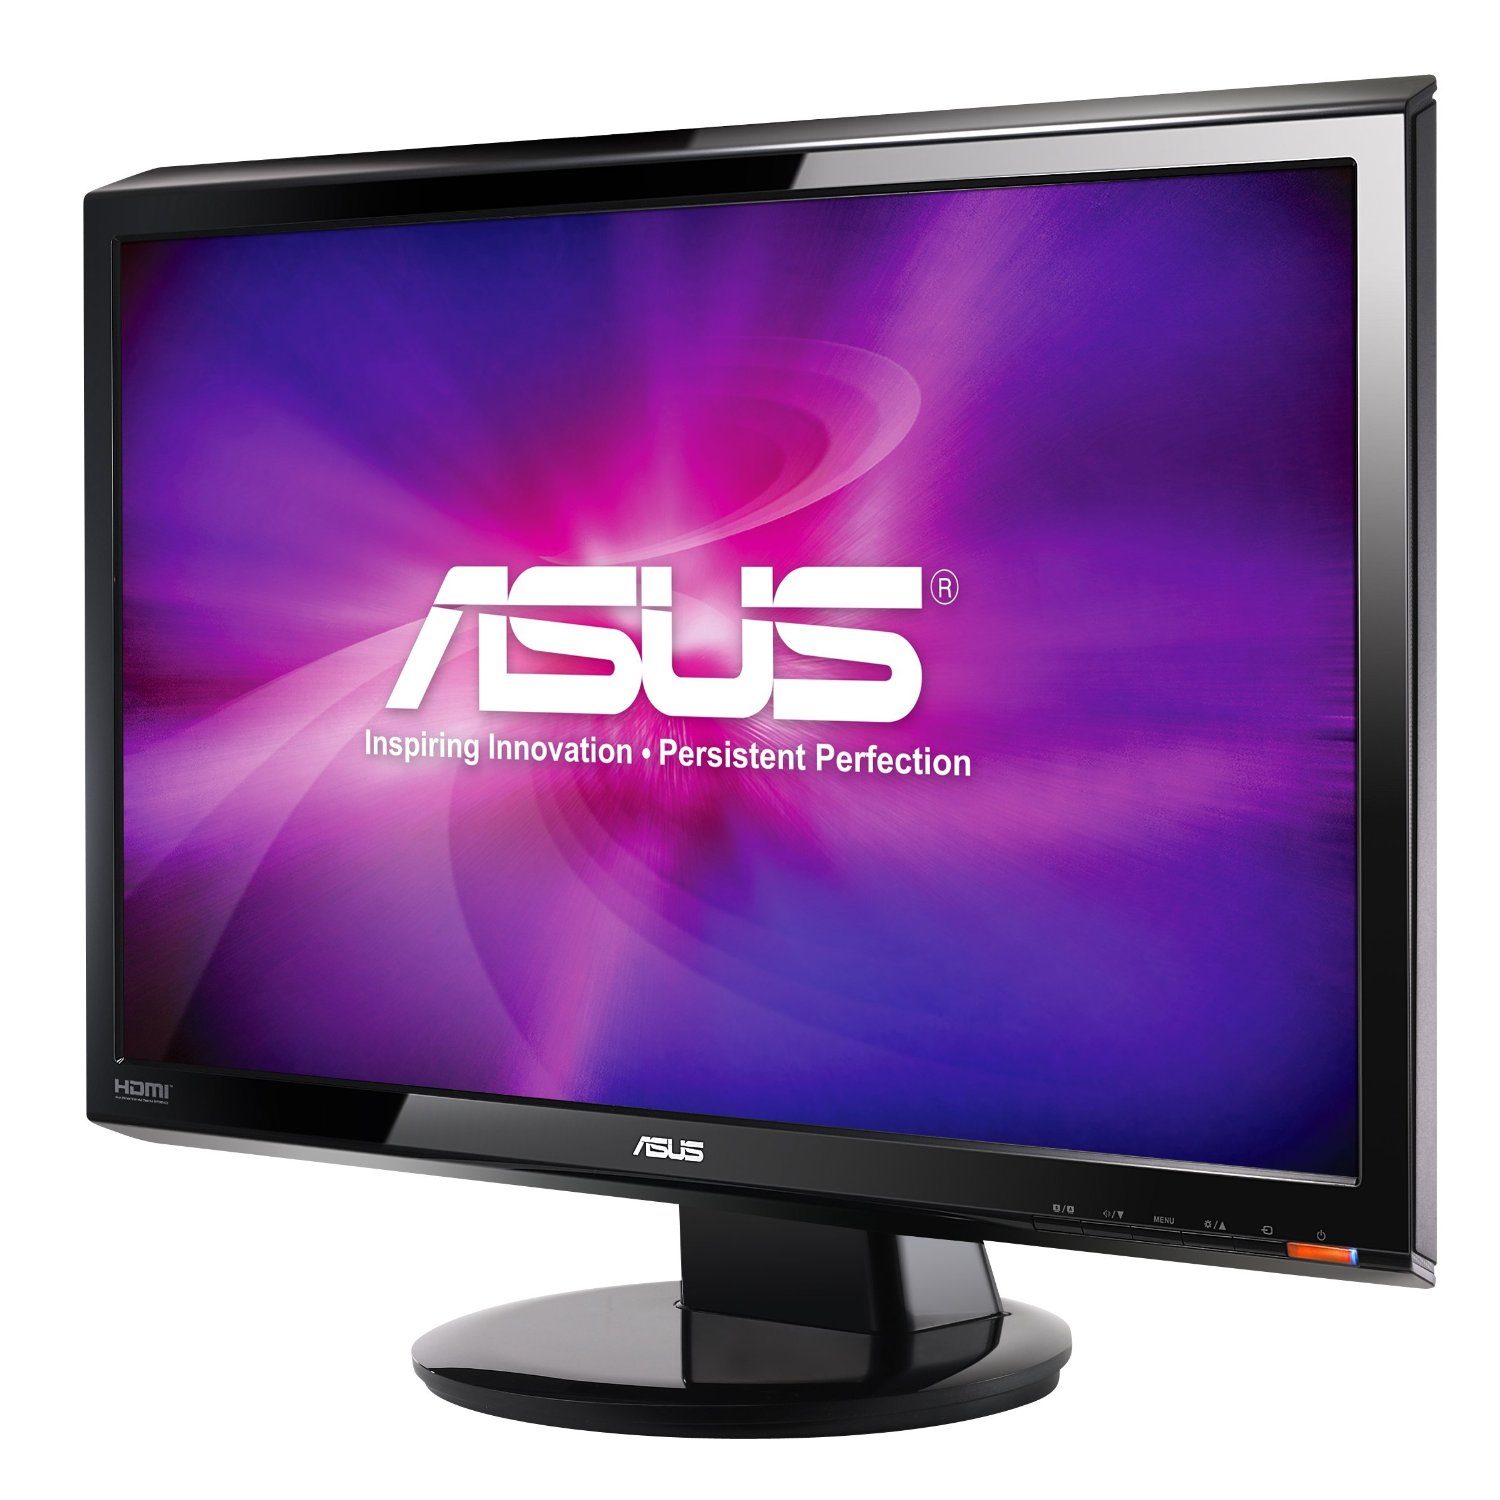 ASUS Announces the PQ321 4K Gaming Monitor